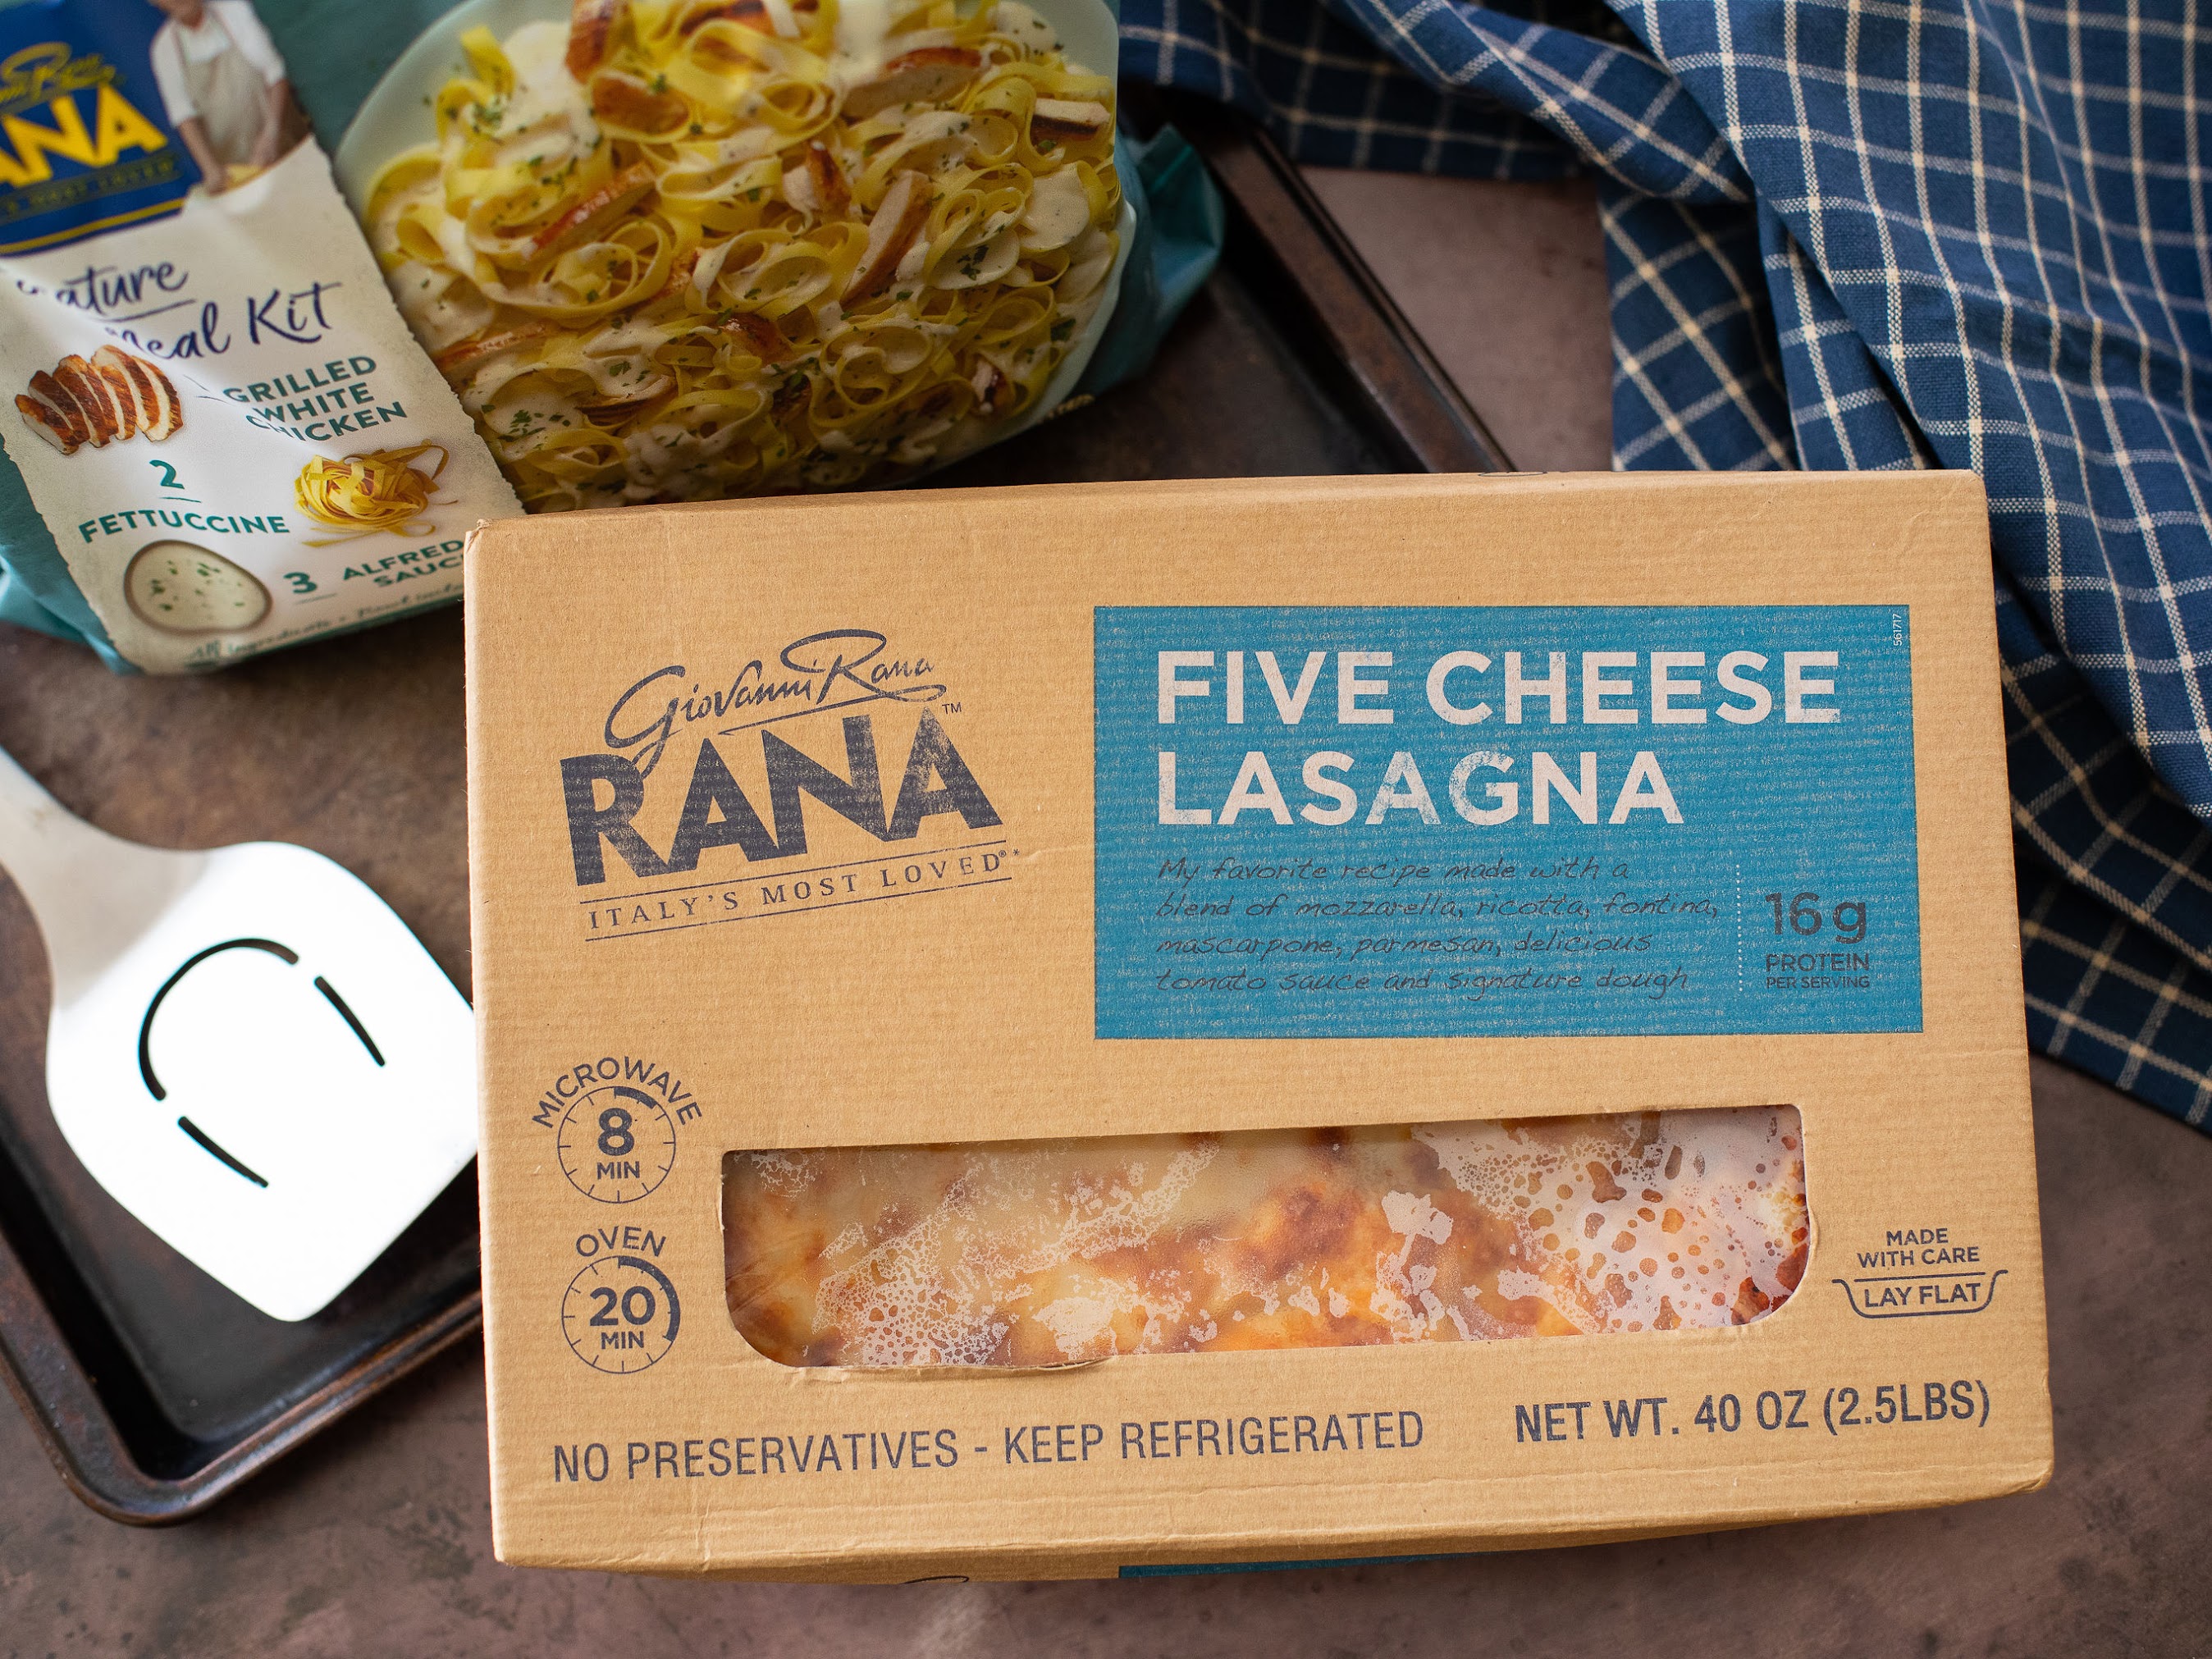 Grab A Rana Pasta Meal Kit For Just $7.99 At Publix (Regular Price $14.79)